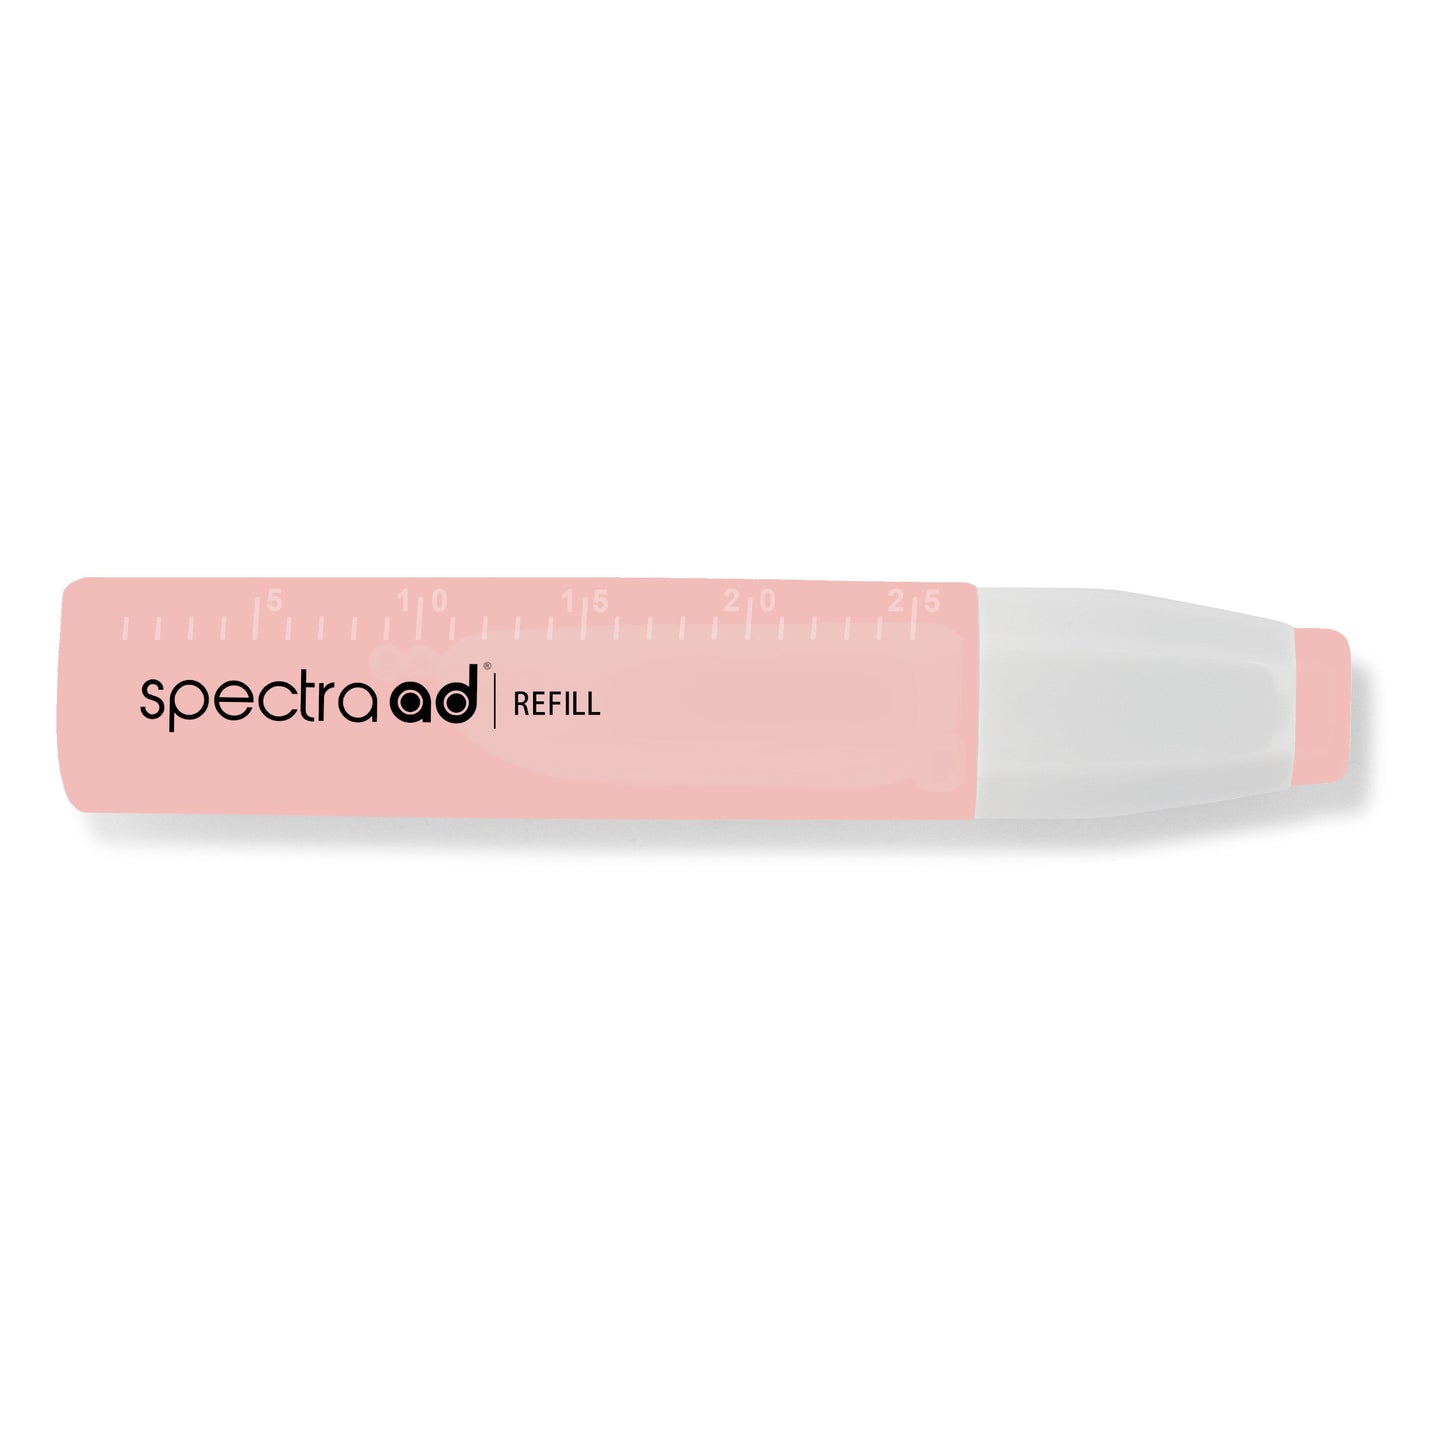 003 - Light Peach - Spectra AD Refill Bottle